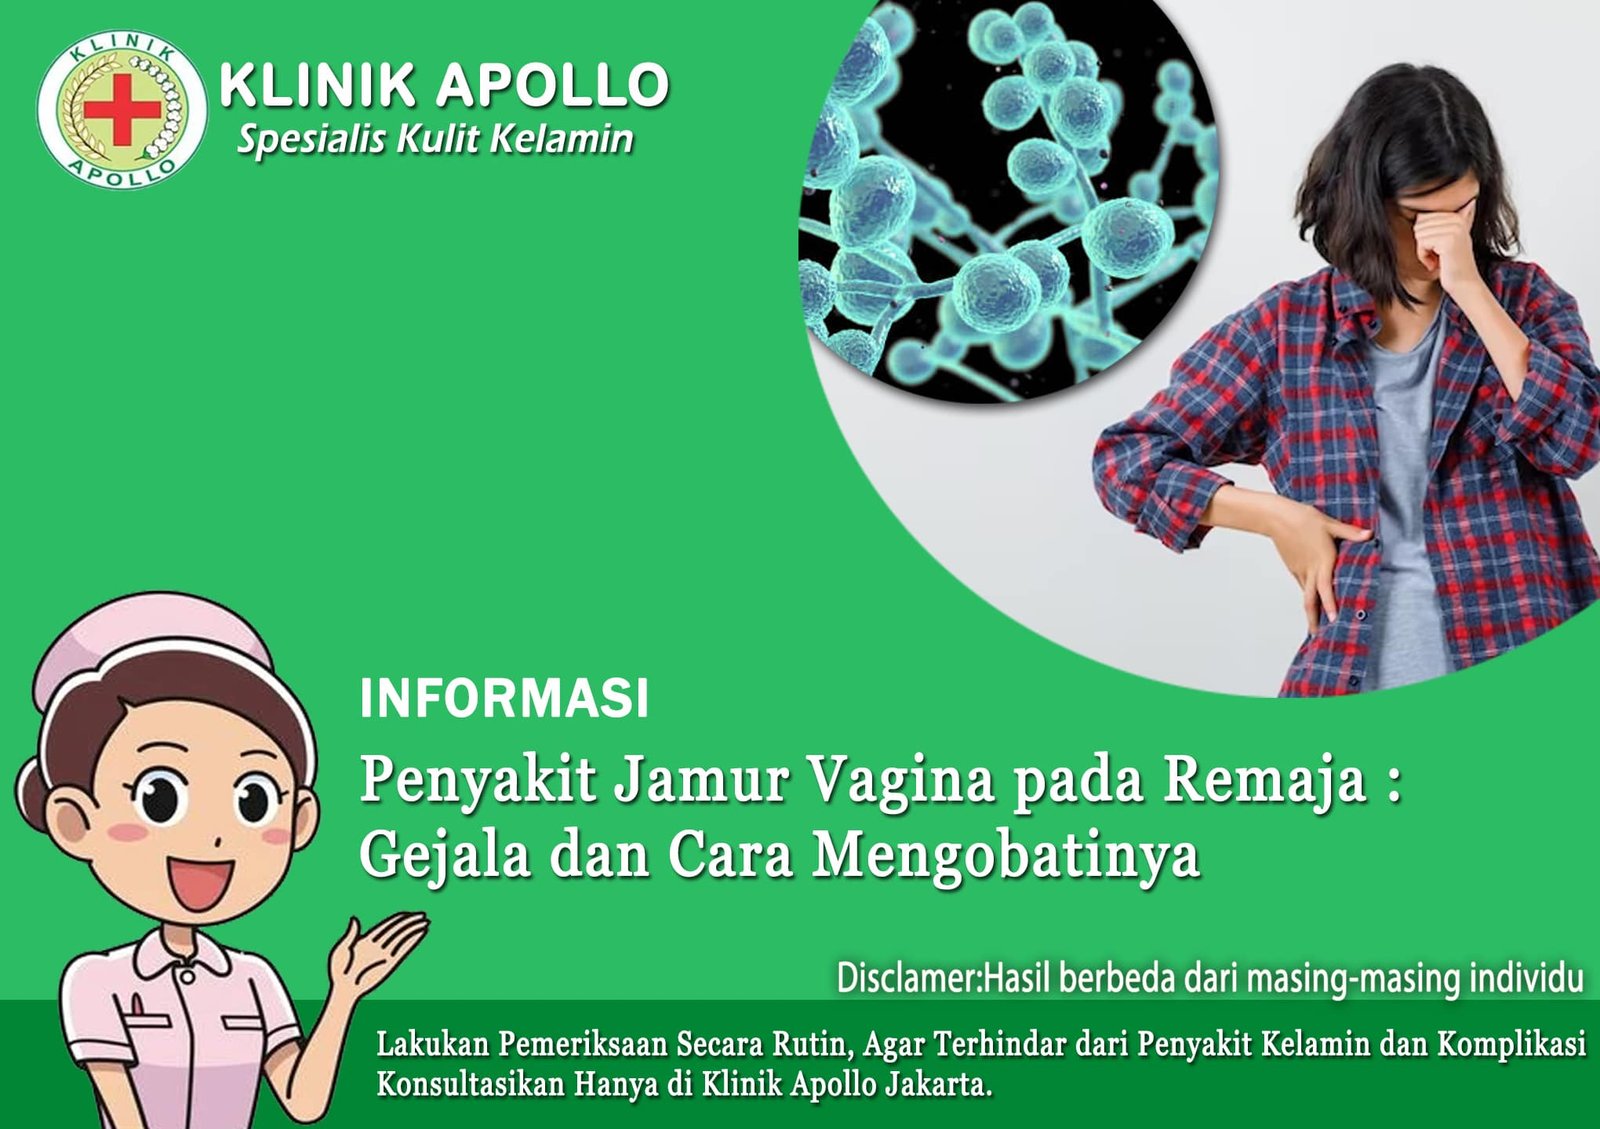 Hubungi dokter untuk penanganan penyakit jamur vagina di Klinik Apollo.